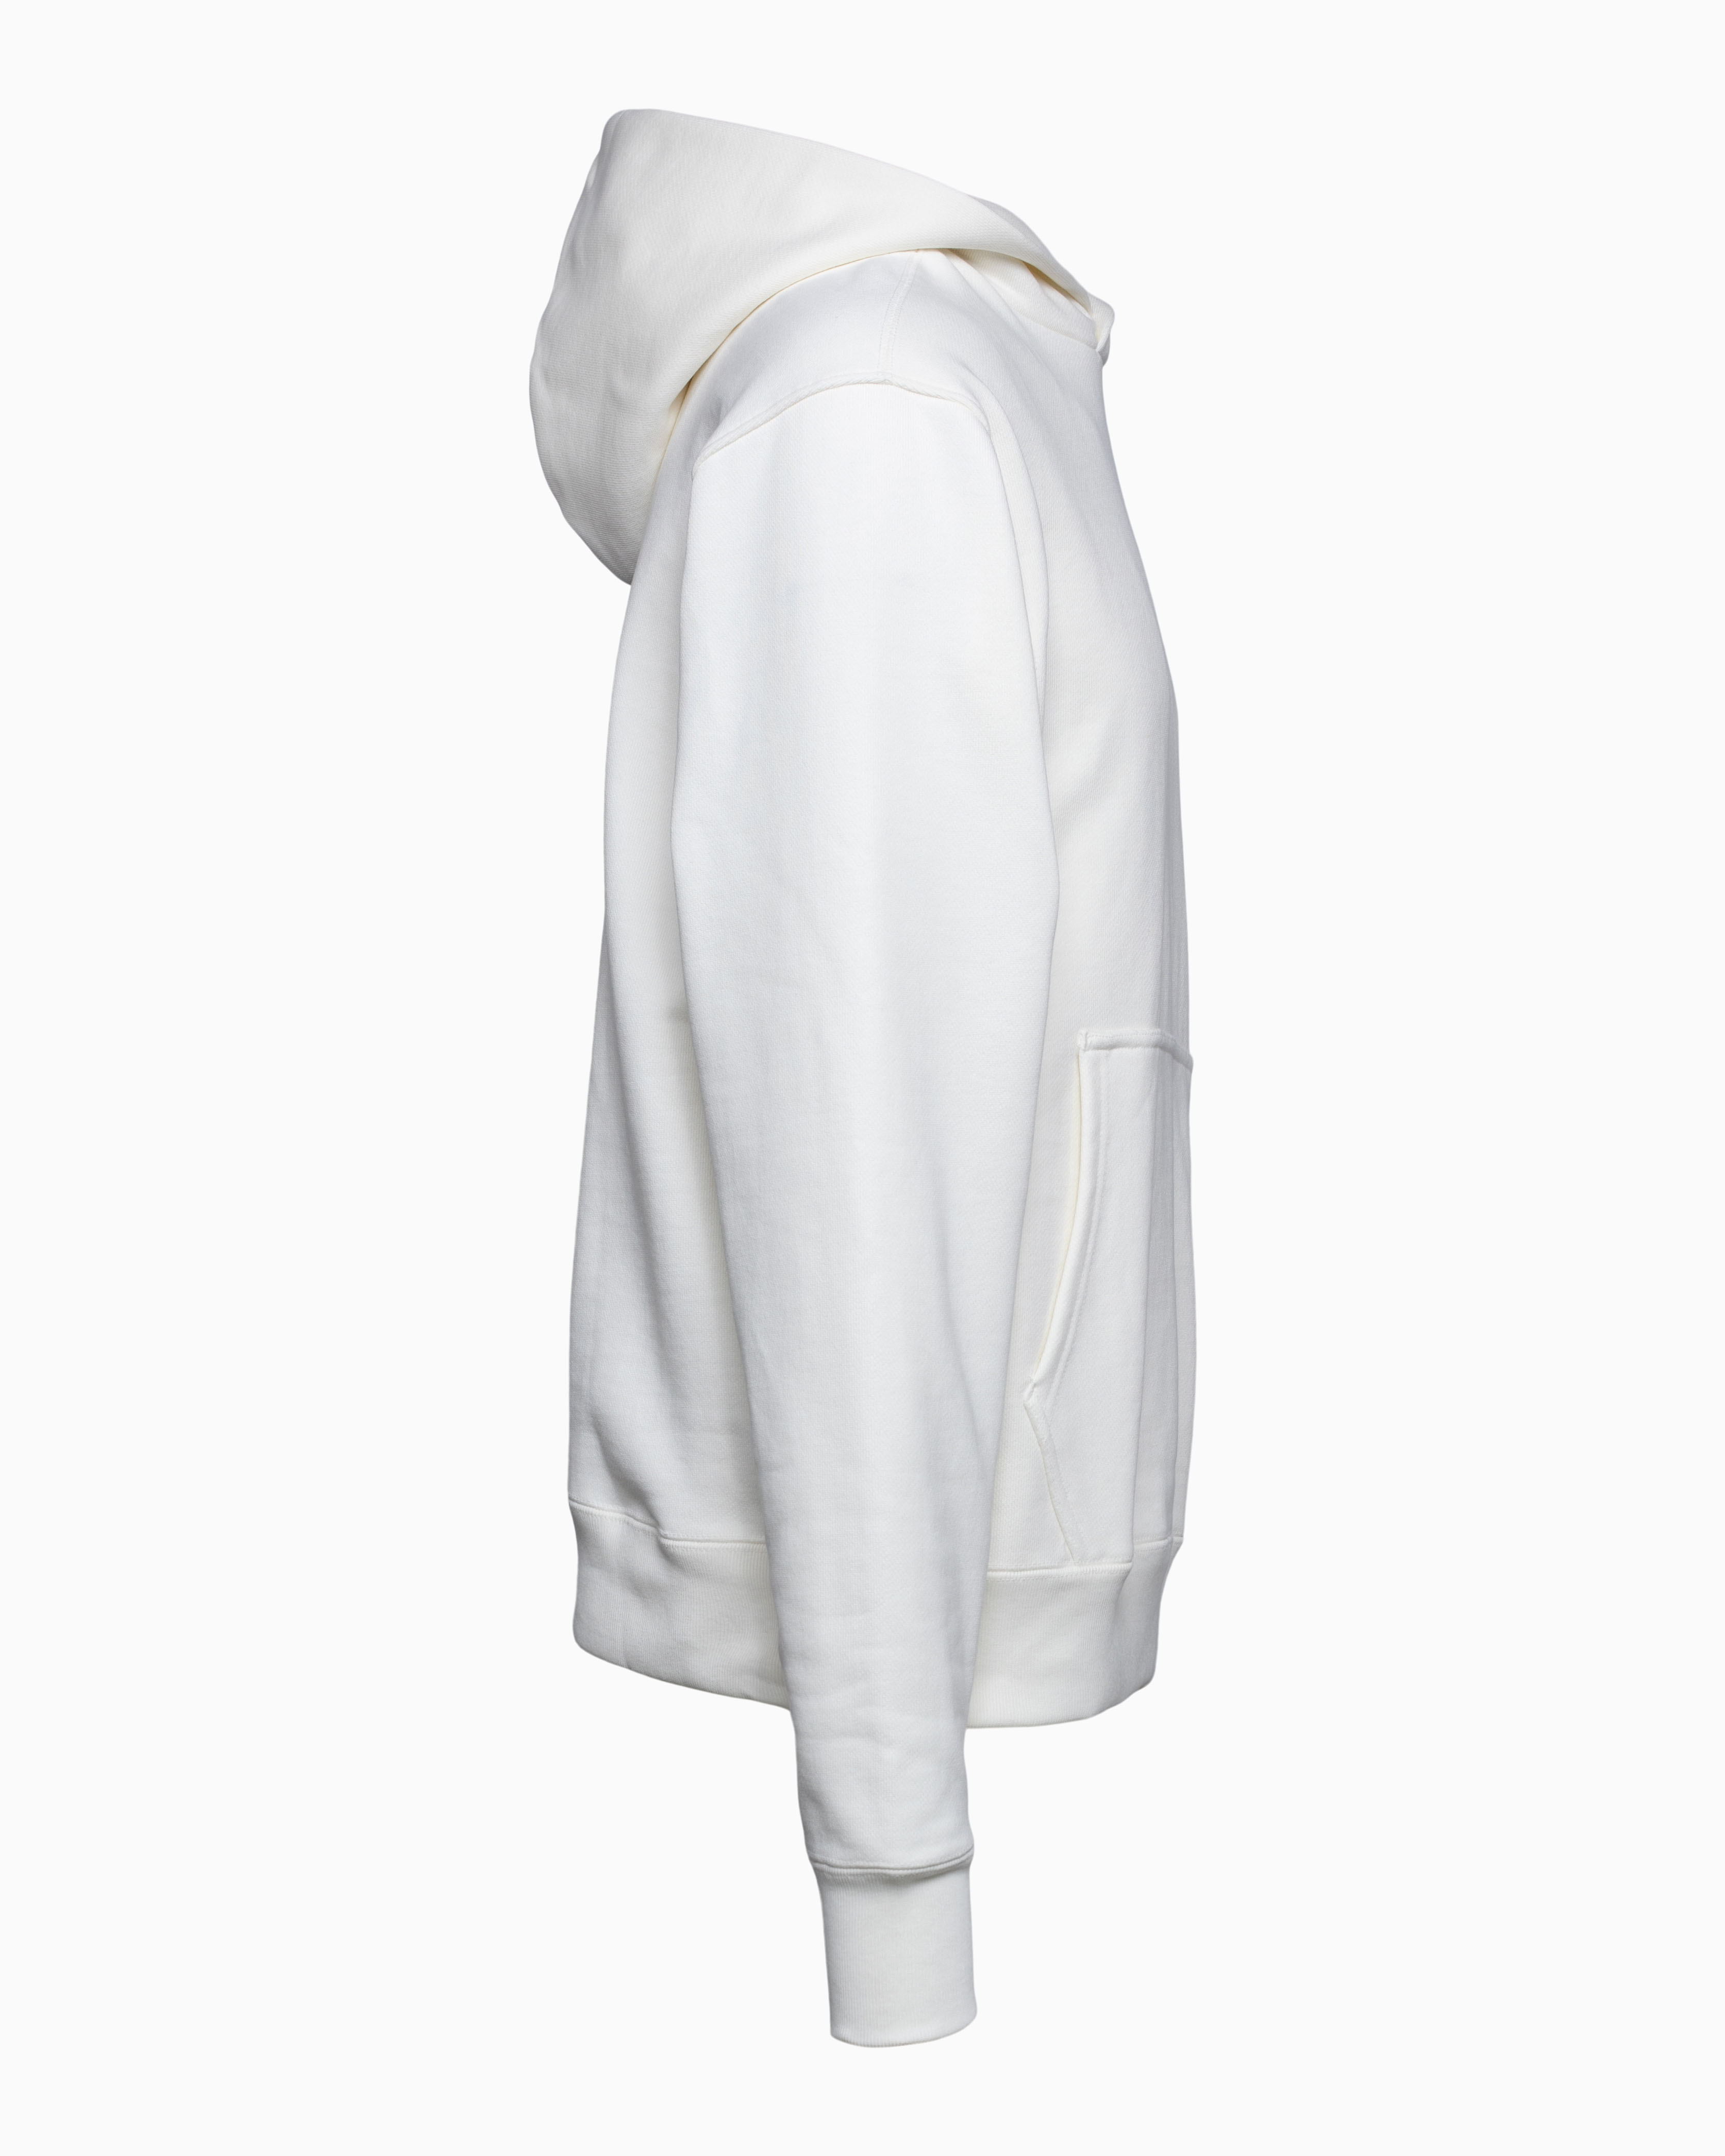 Adidas x Pharrell Williams Humanrace Basics Hoodie Off White - HF9906